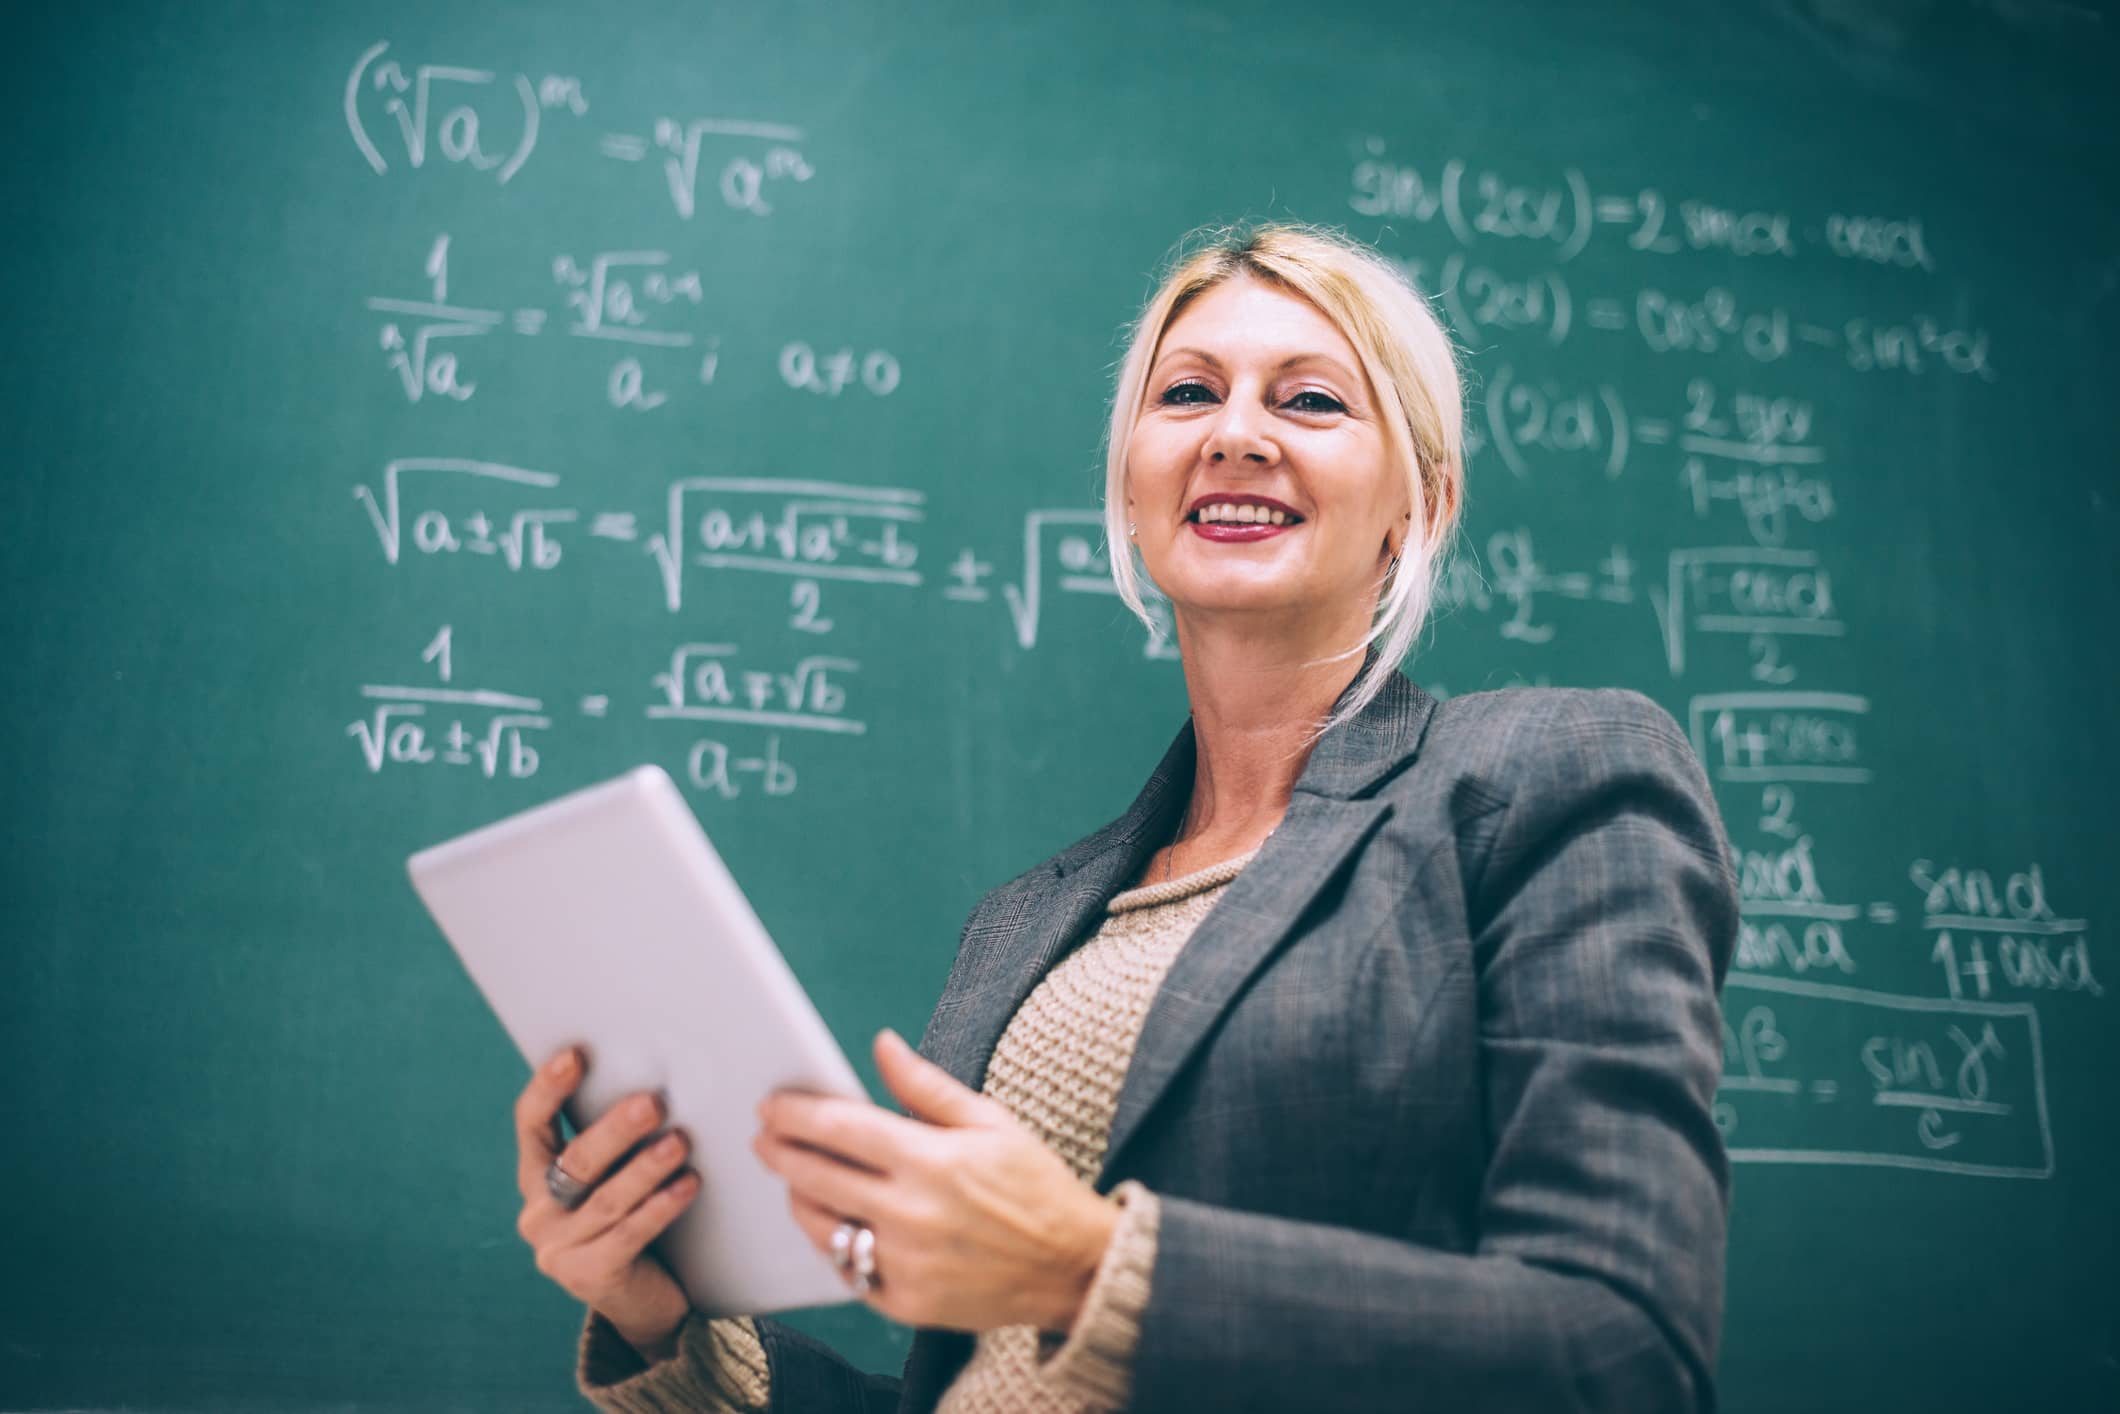 Science teacher teaching at the chalkboard